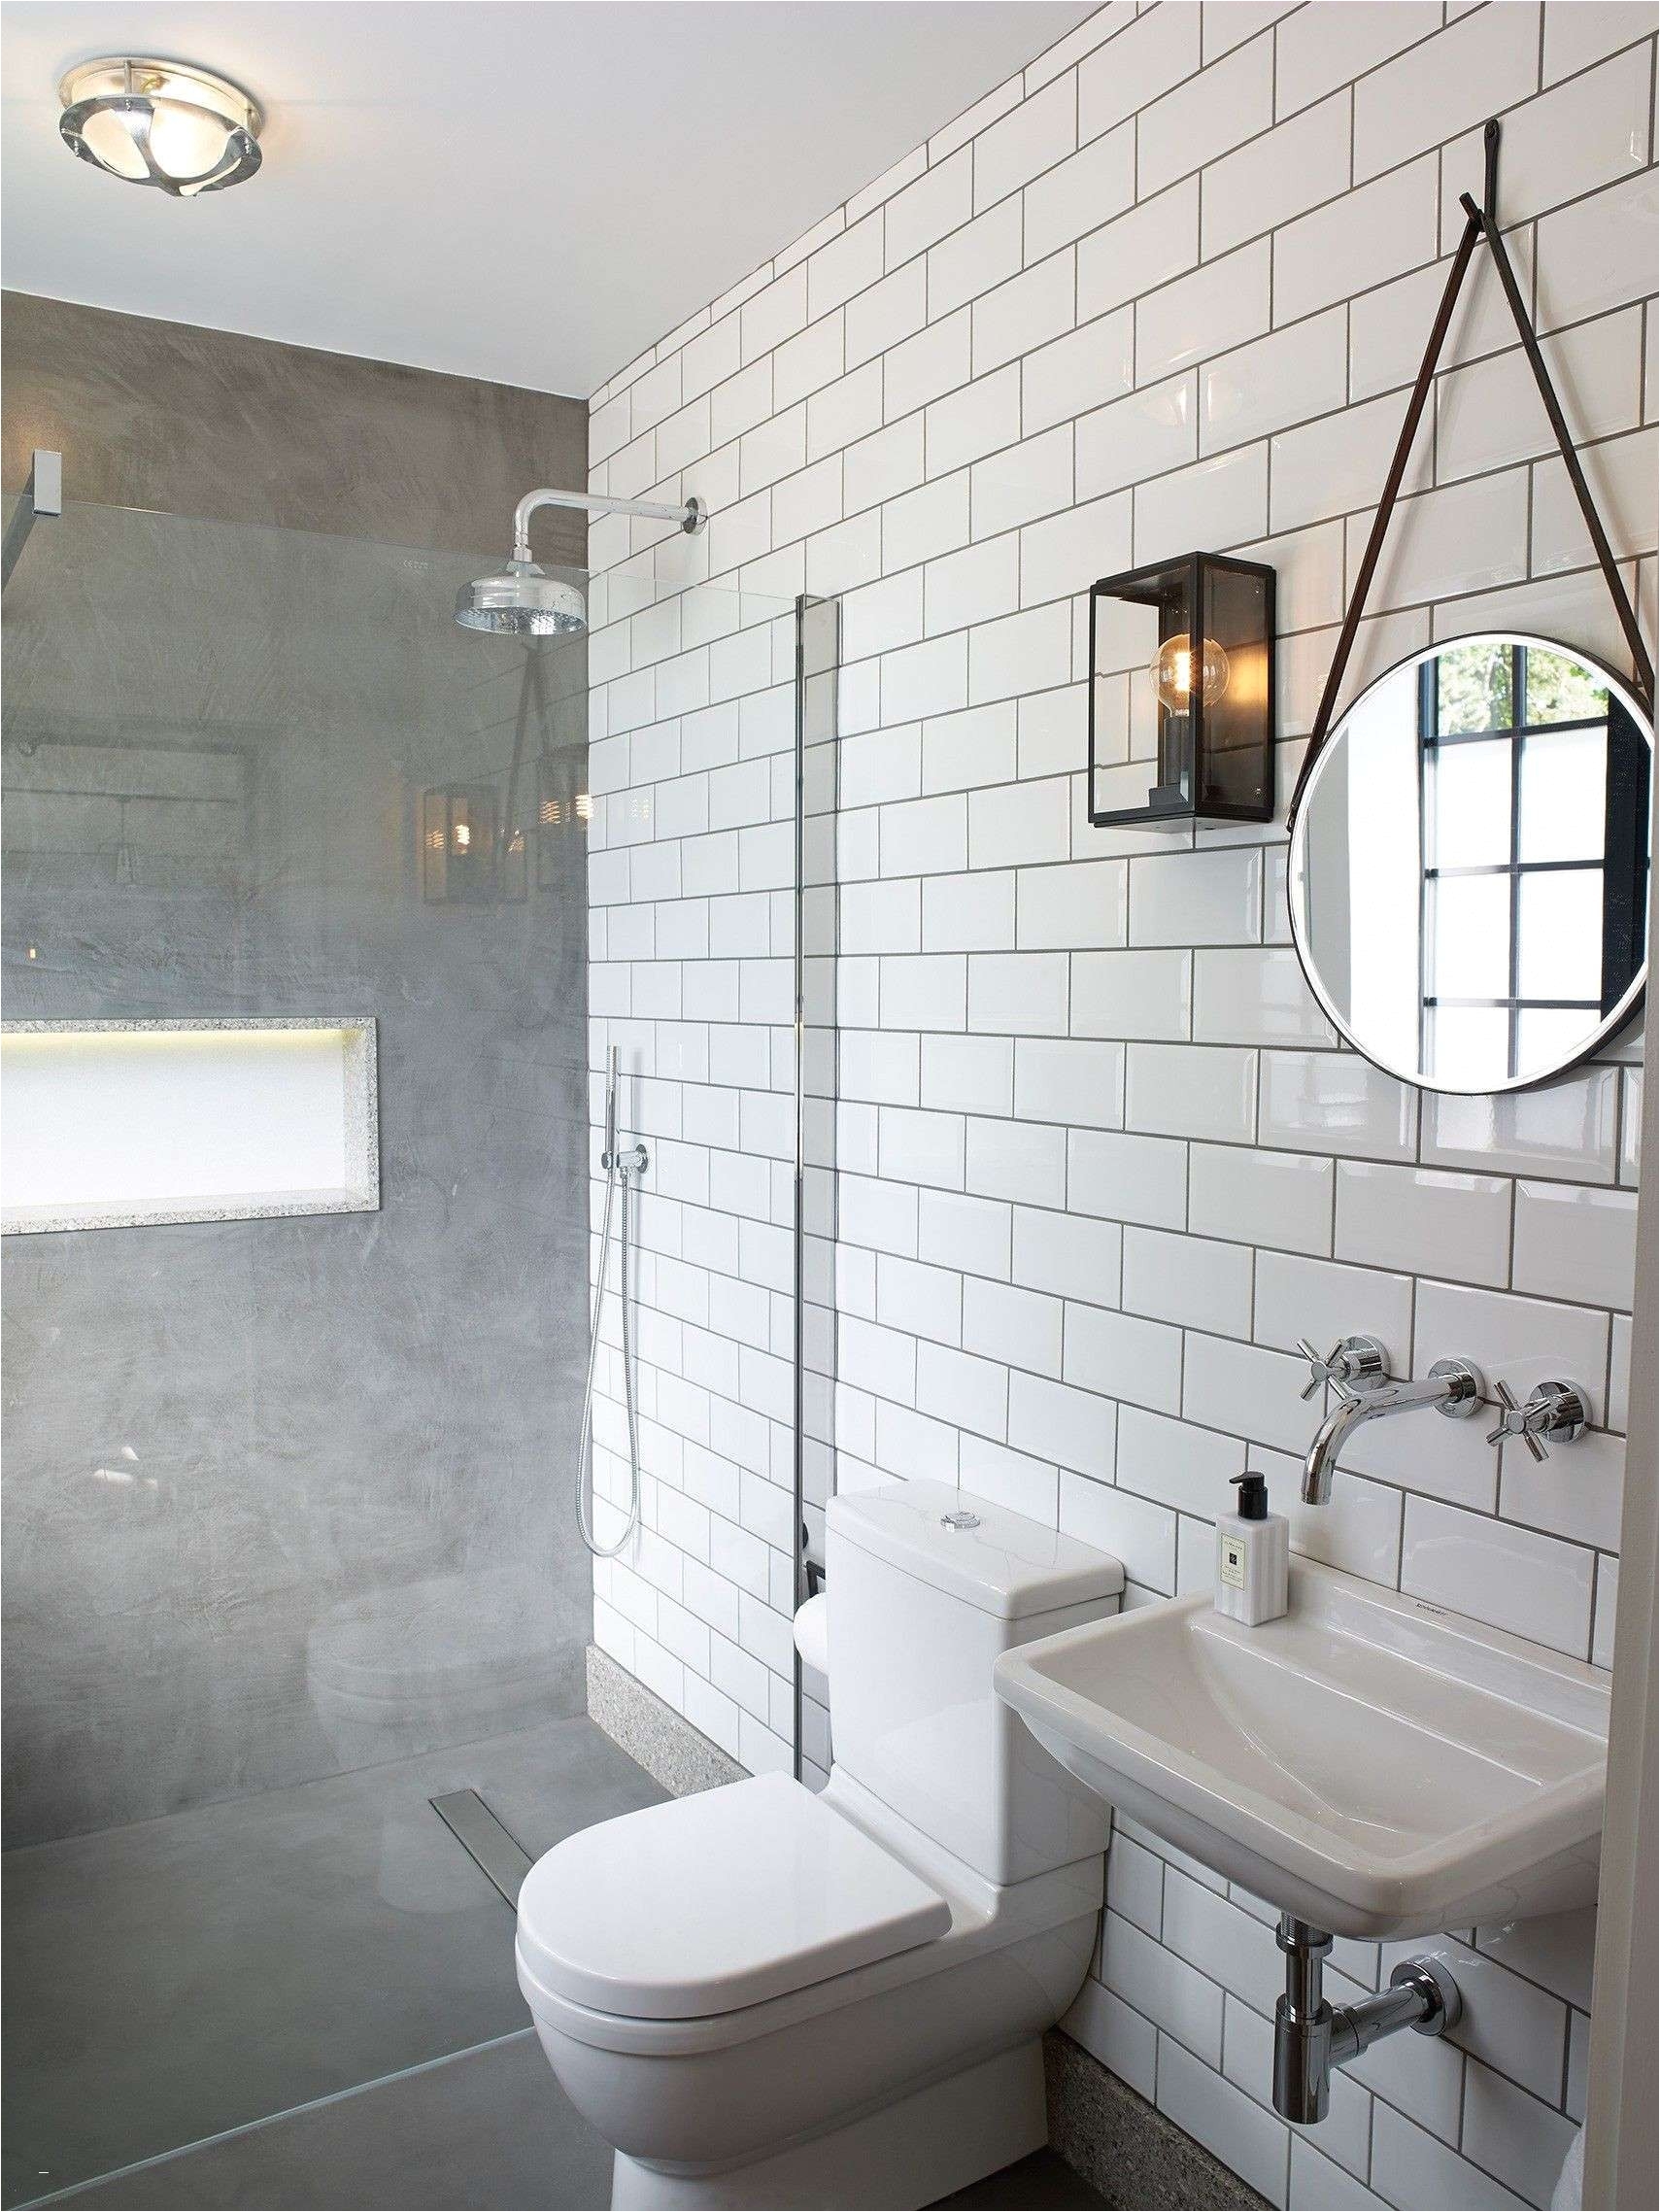 Bathroom Light Design Ideas Bathroom Basket Ideas Gorgeous Bathroom Wall Decor Ideas Incredible